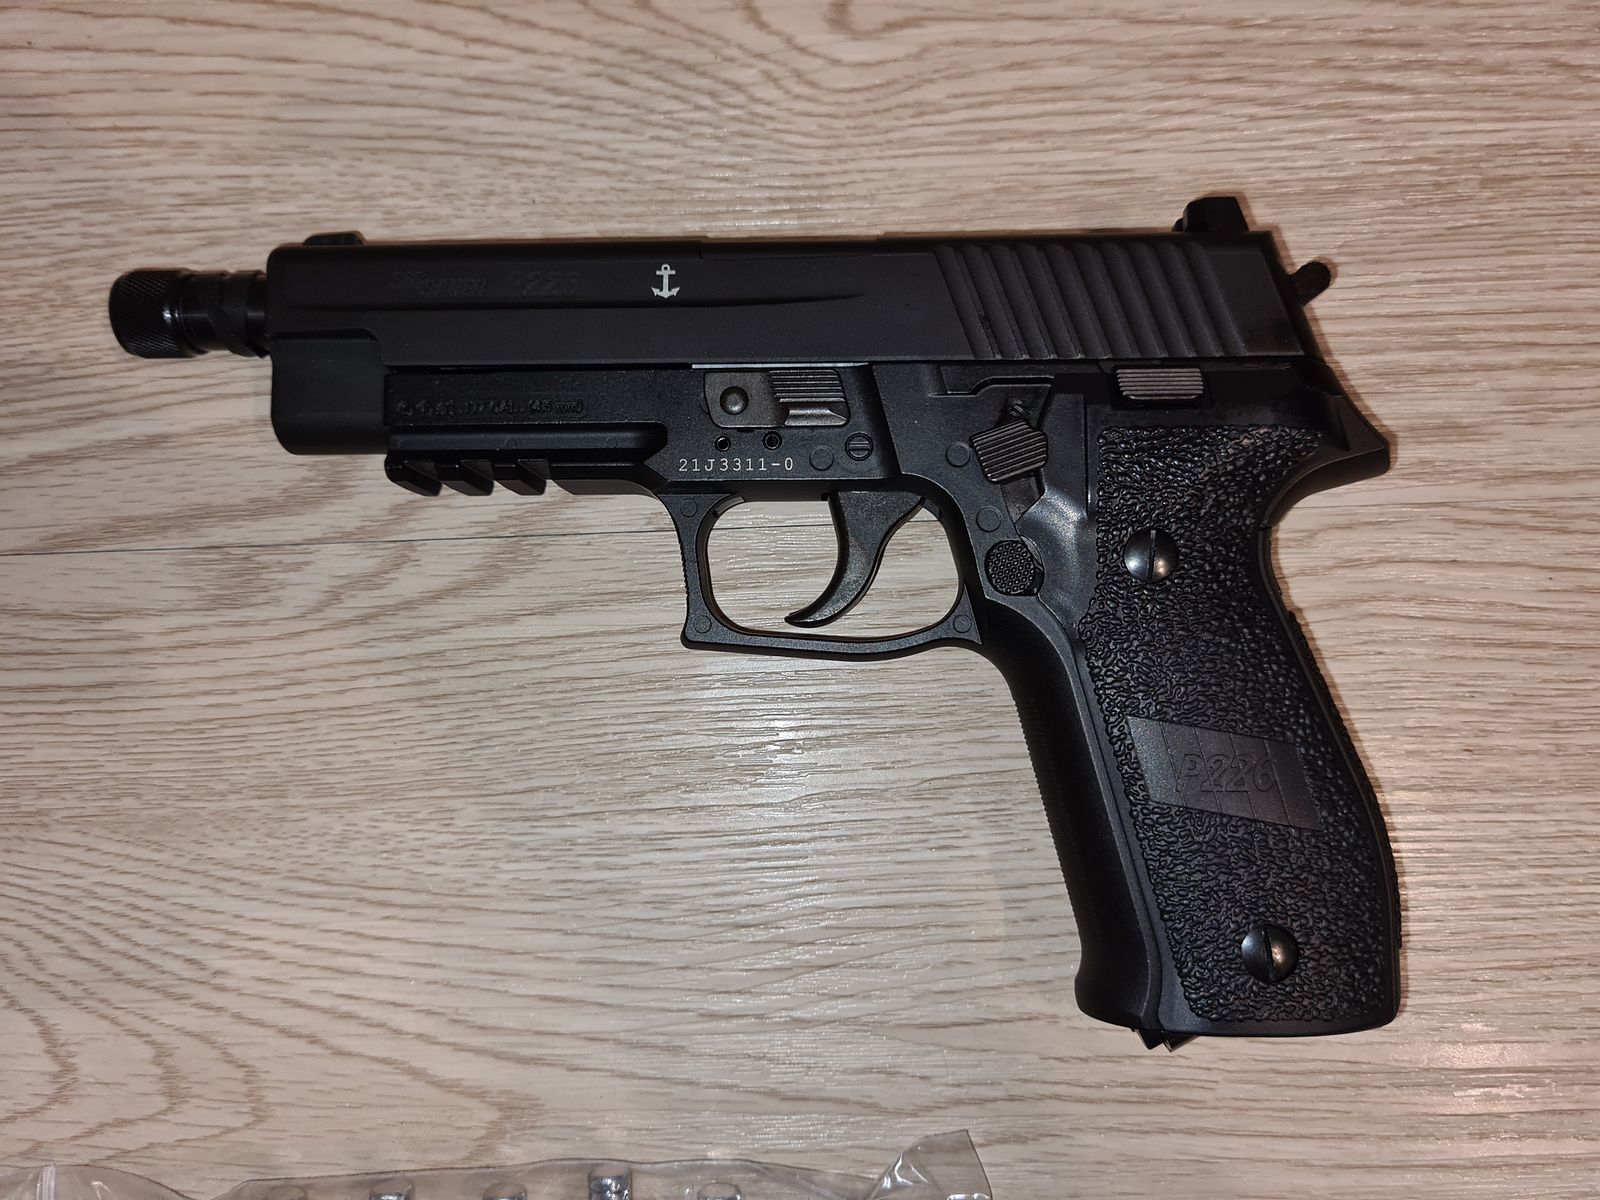  Co2-Pistole SIG SAUER P226 Schwarz  + ca 950stk. 4,5 mm Diabolo  + 8 Co2-Kapseln Umarex